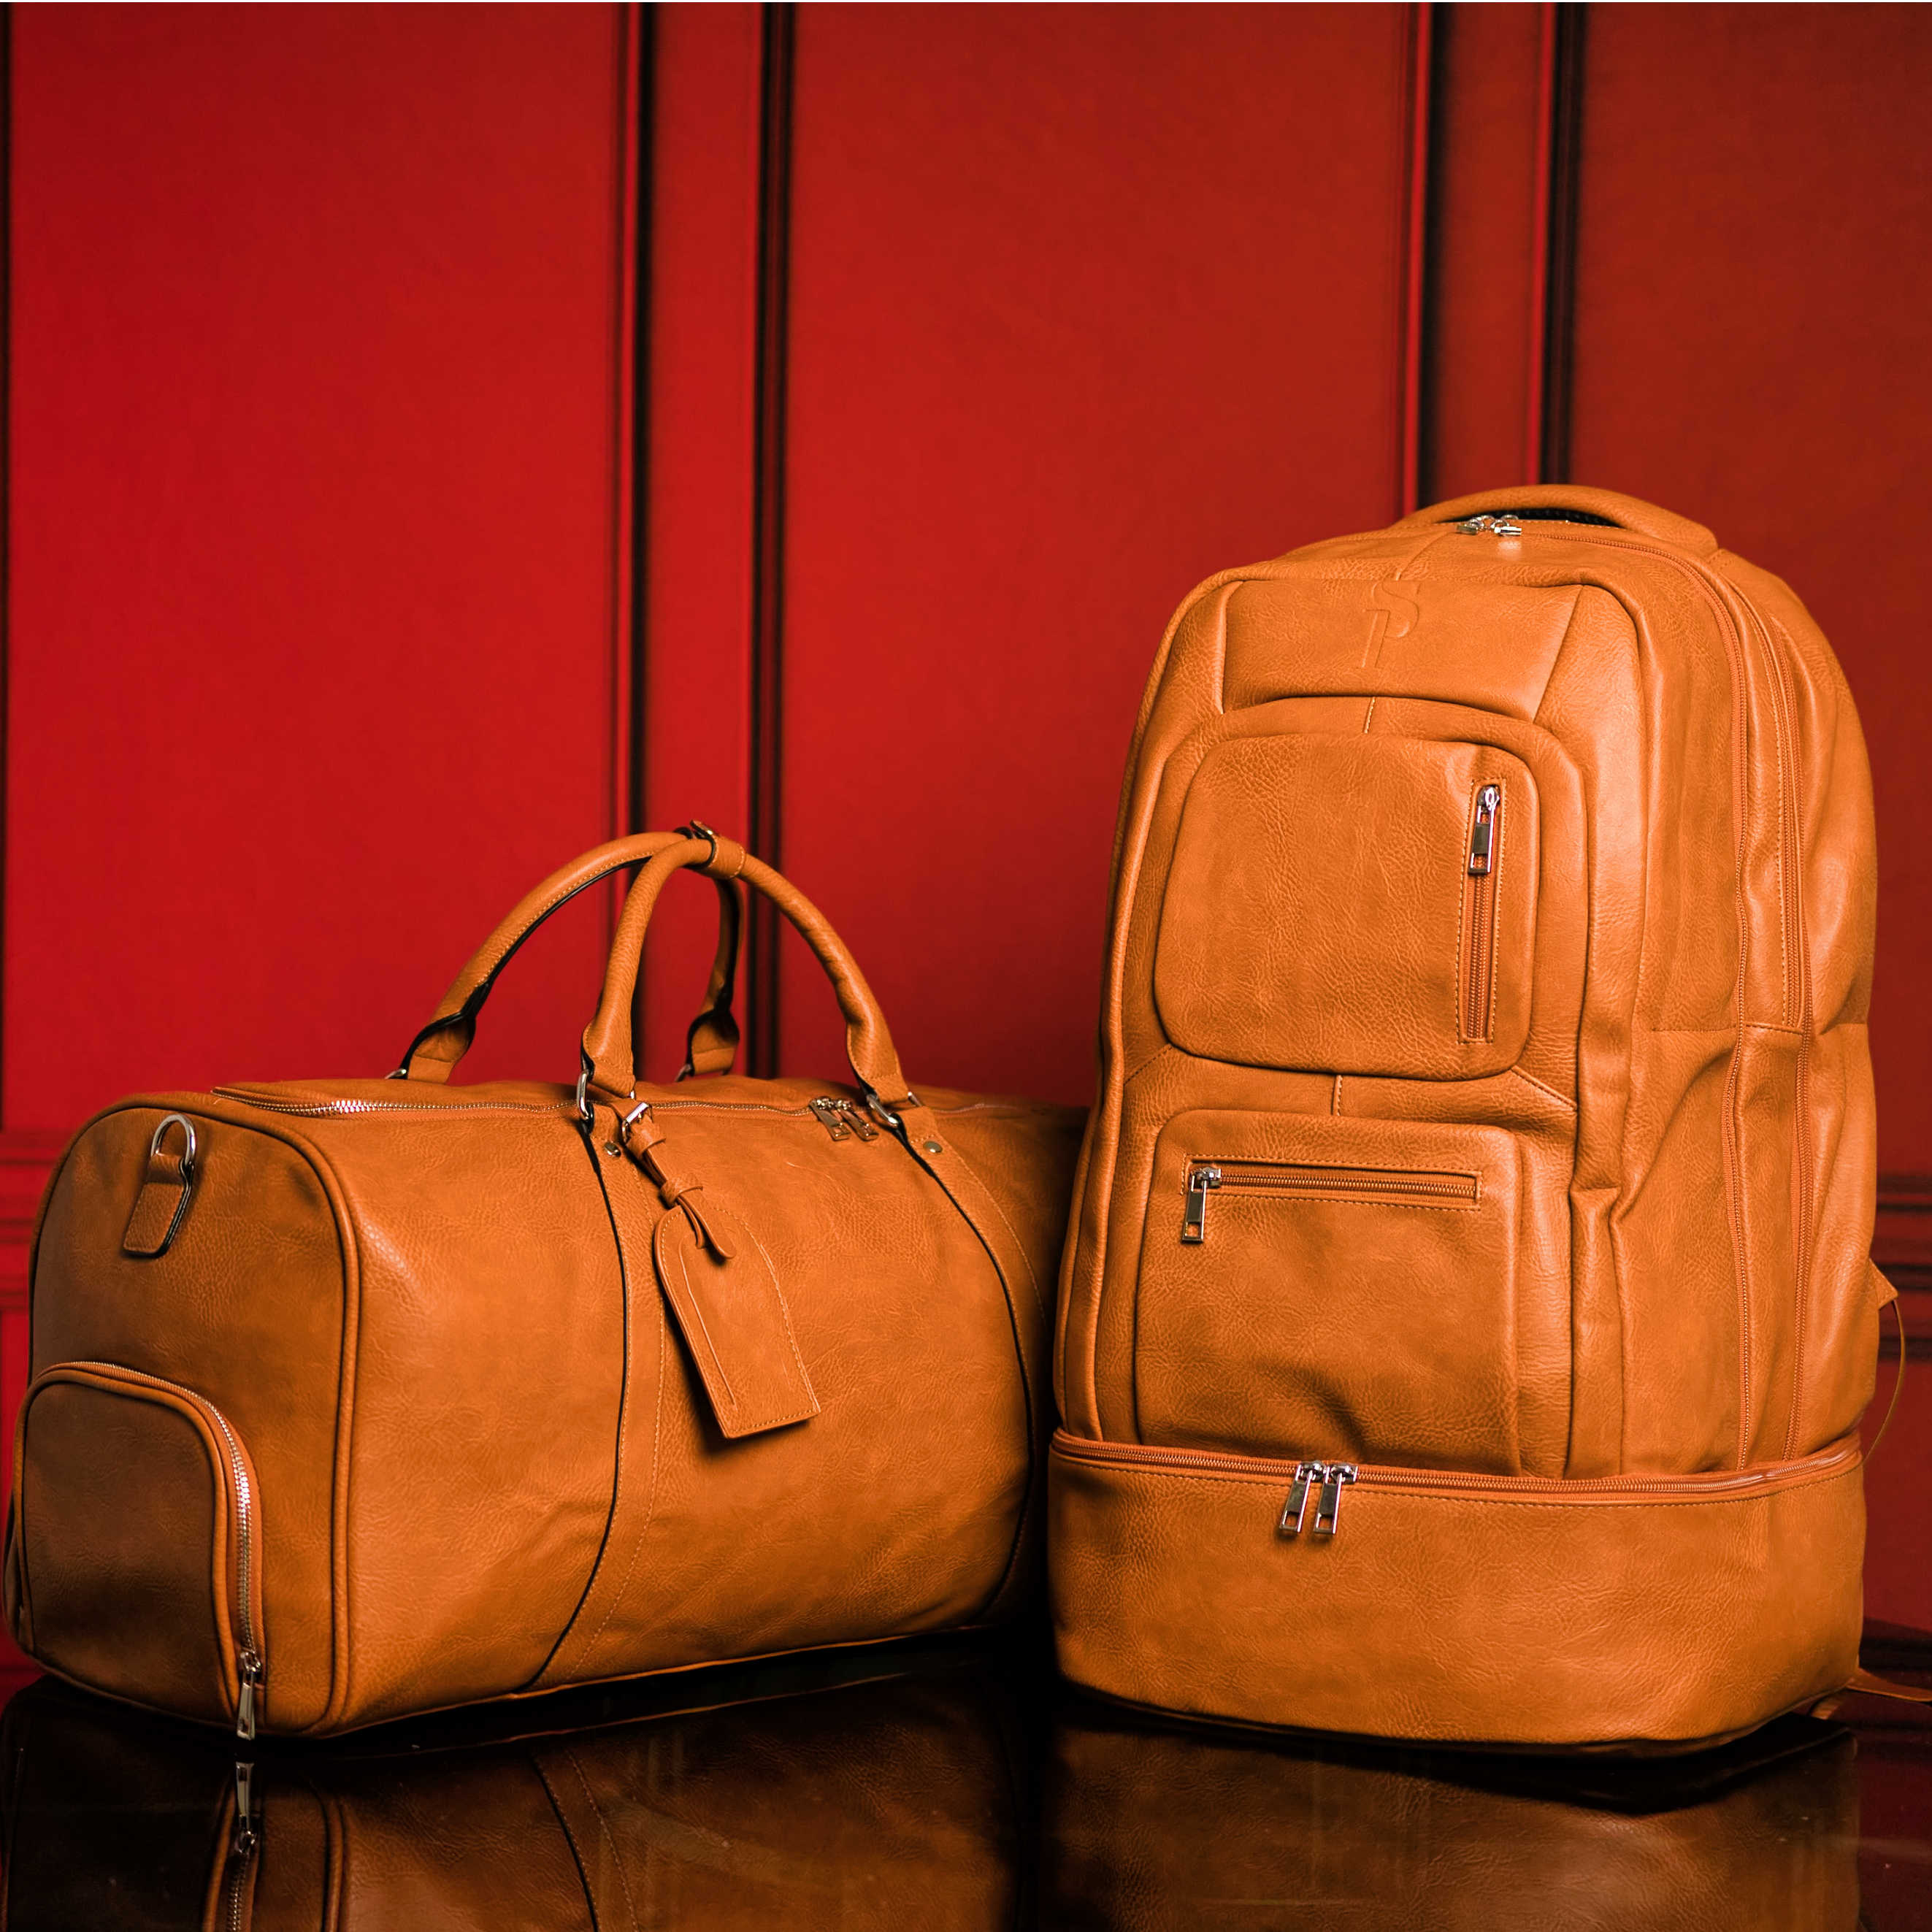 Brown Tumbled Leather Signature Bag Set (Signature and Duffle Bag)